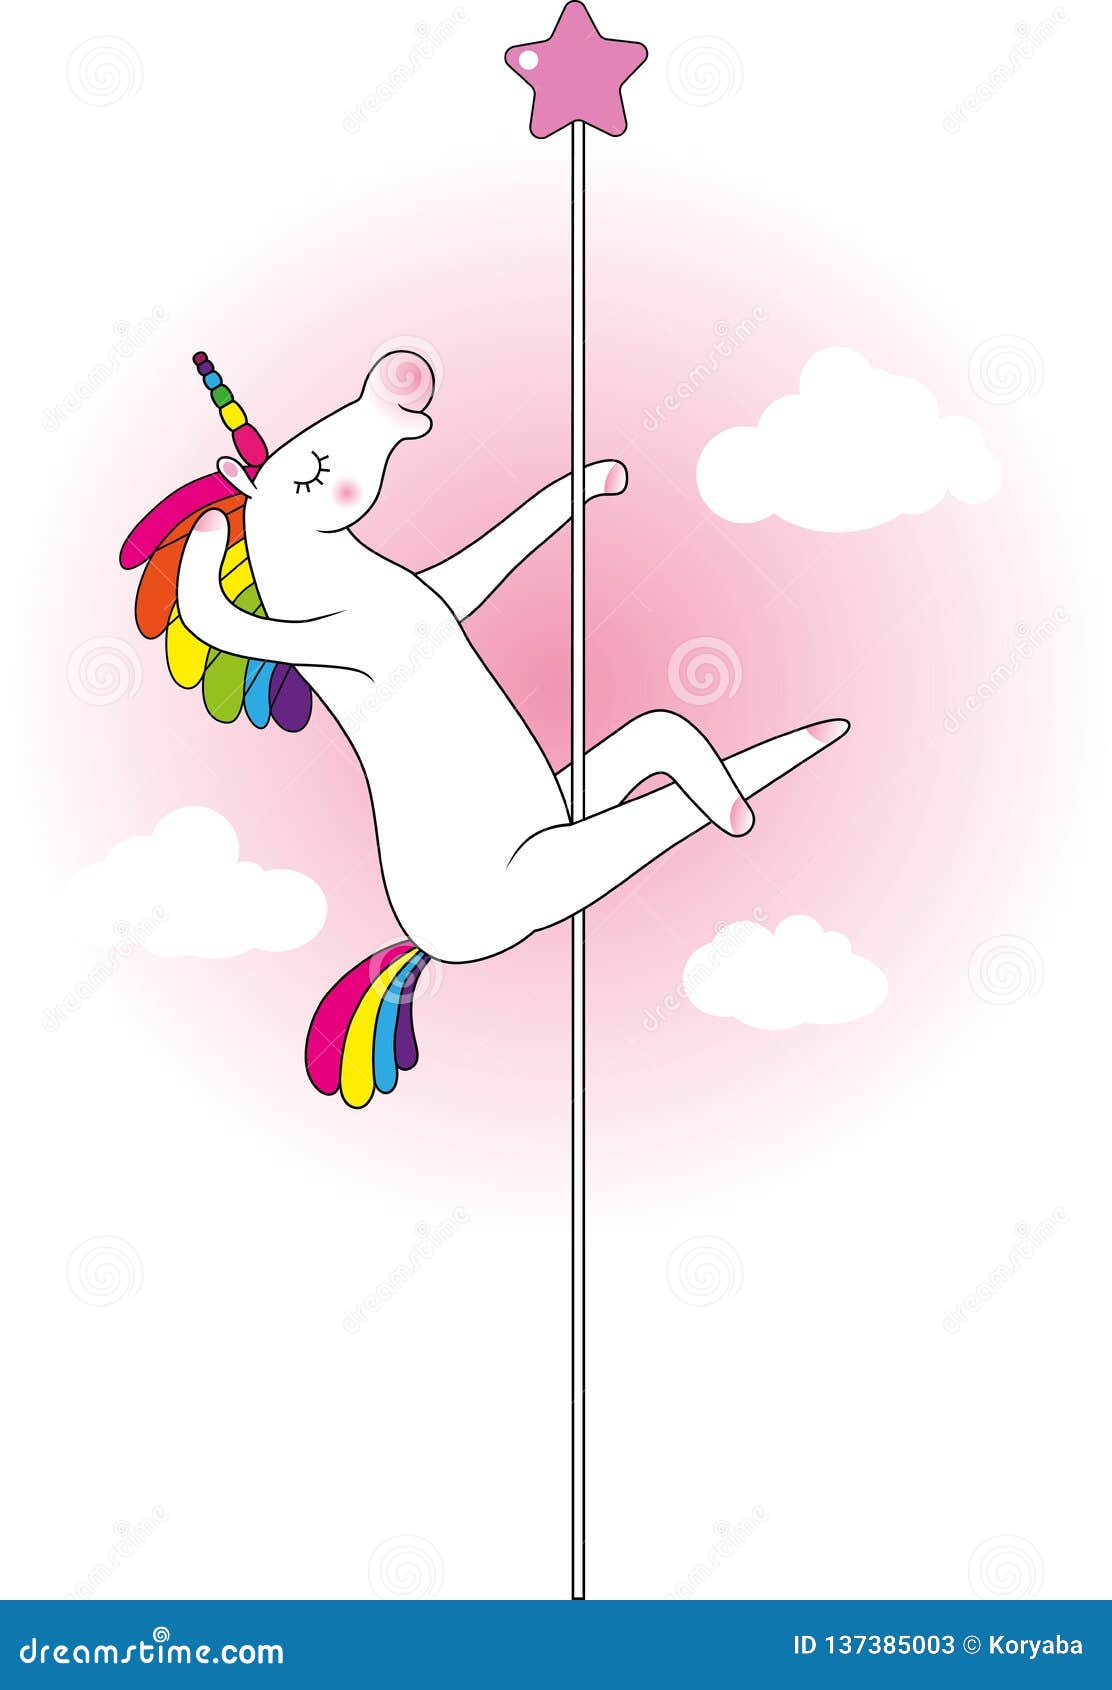 unicorn pole dancer